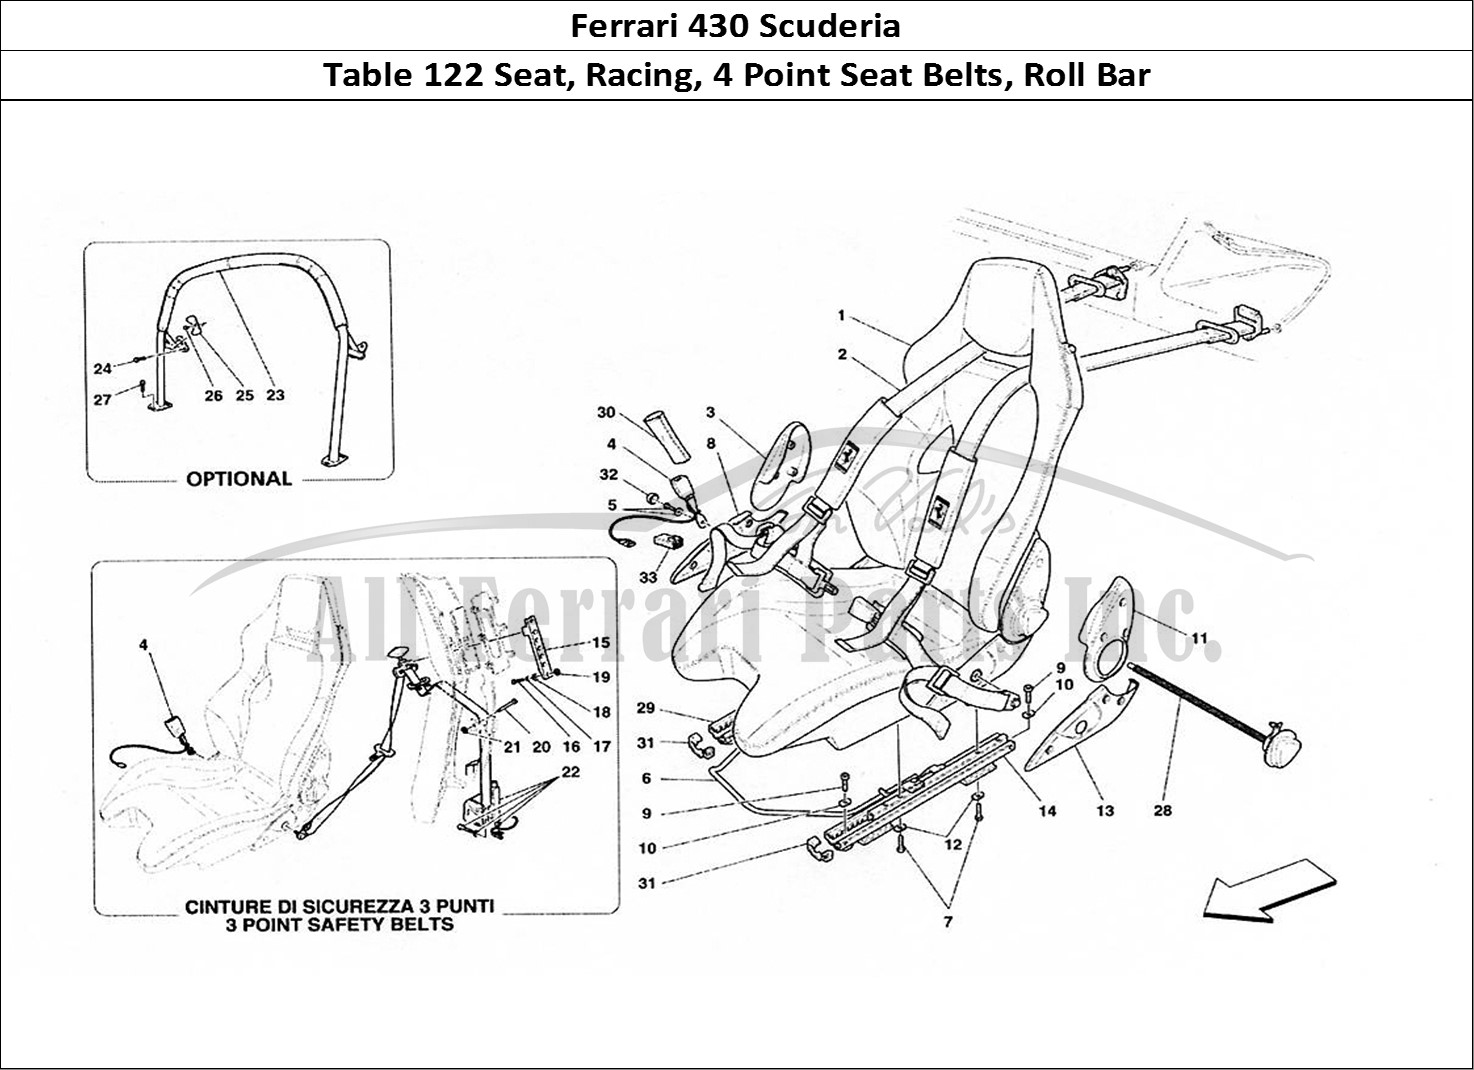 Ferrari Parts Ferrari 430 Scuderia Page 122 Racing Seat -4 Point Belt